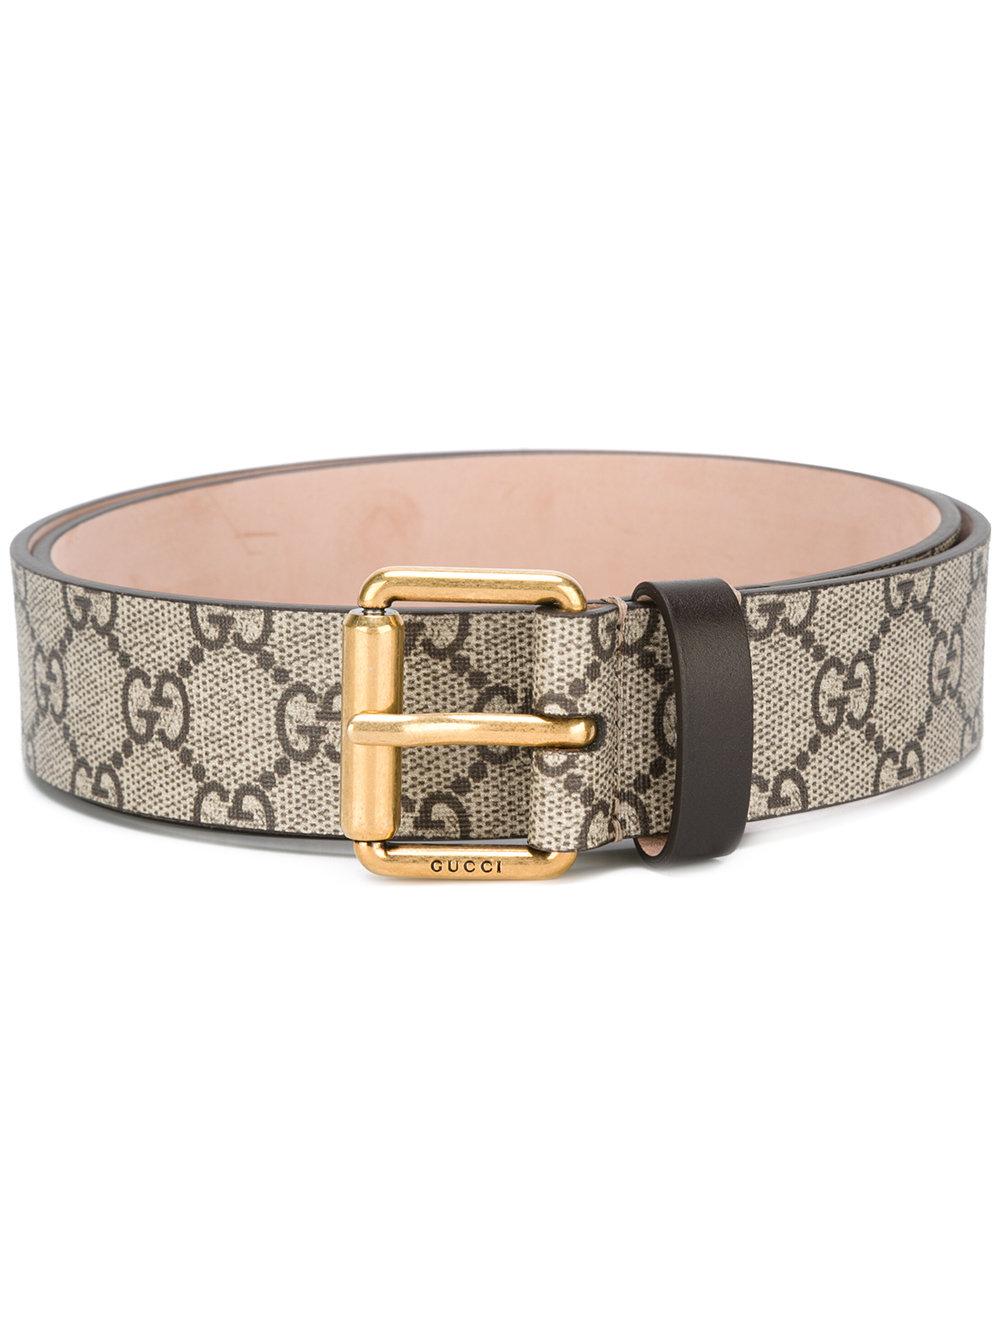 Gucci Gg Supreme Snake Print Belt in Brown for Men | Lyst